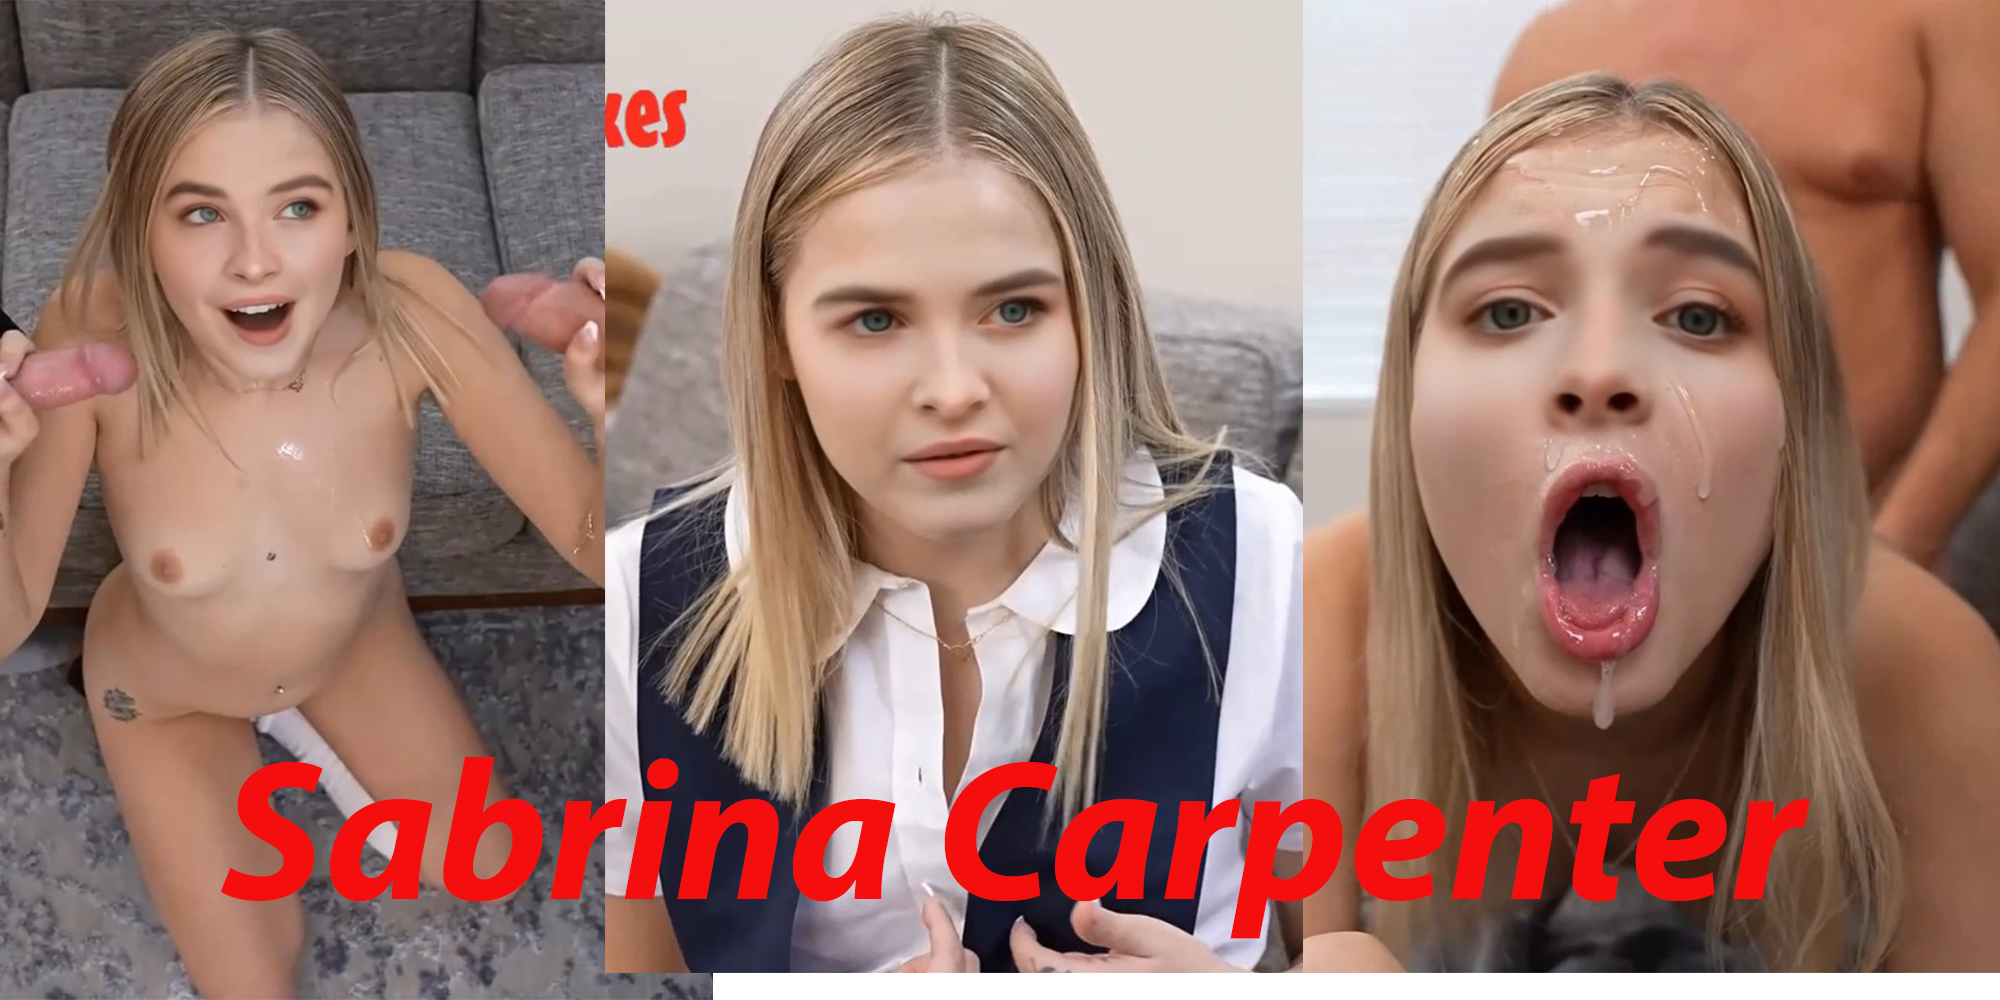 Sabrina Carpenter needs you to pretend to be her daddy